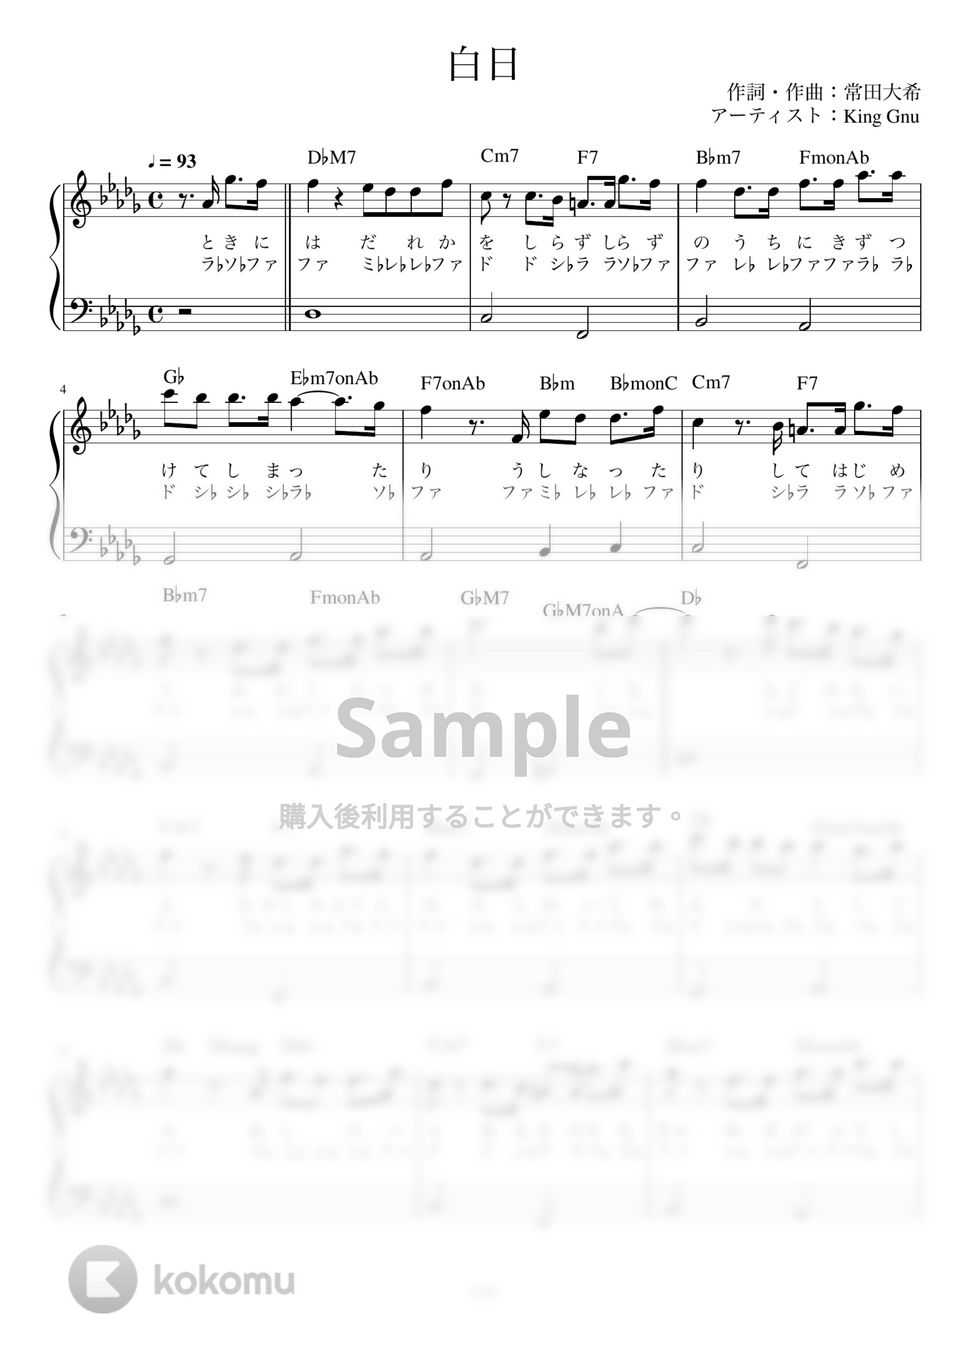 King Gnu - 白日 (かんたん / 歌詞付き / ドレミ付き / 初心者) by piano.tokyo